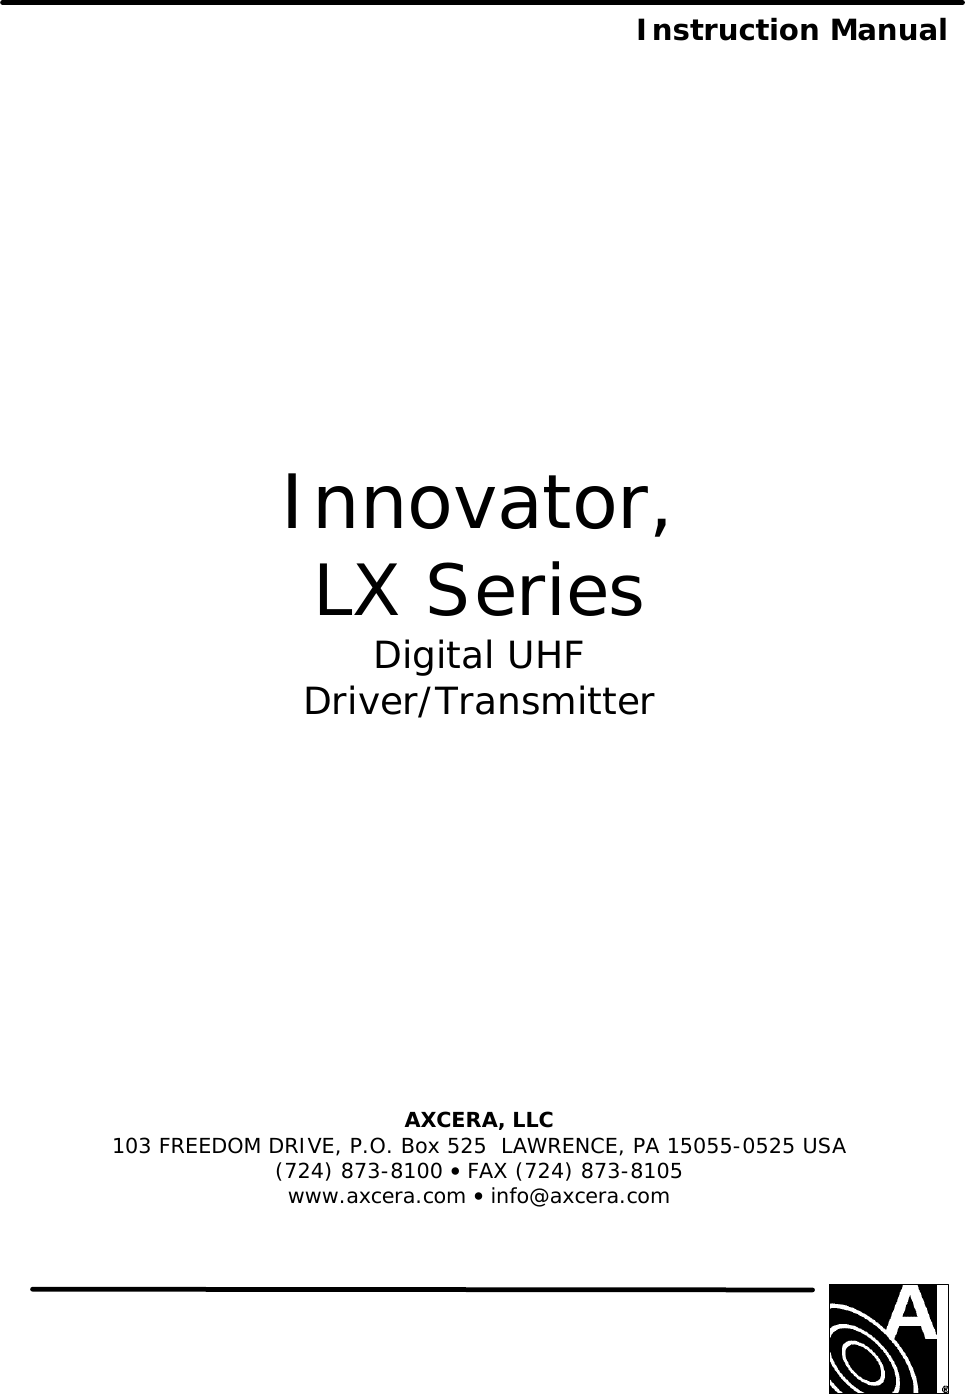  Instruction Manual                  Innovator, LX Series Digital UHF Driver/Transmitter             AXCERA, LLC  103 FREEDOM DRIVE, P.O. Box 525  LAWRENCE, PA 15055-0525 USA (724) 873-8100 • FAX (724) 873-8105 www.axcera.com • info@axcera.com      